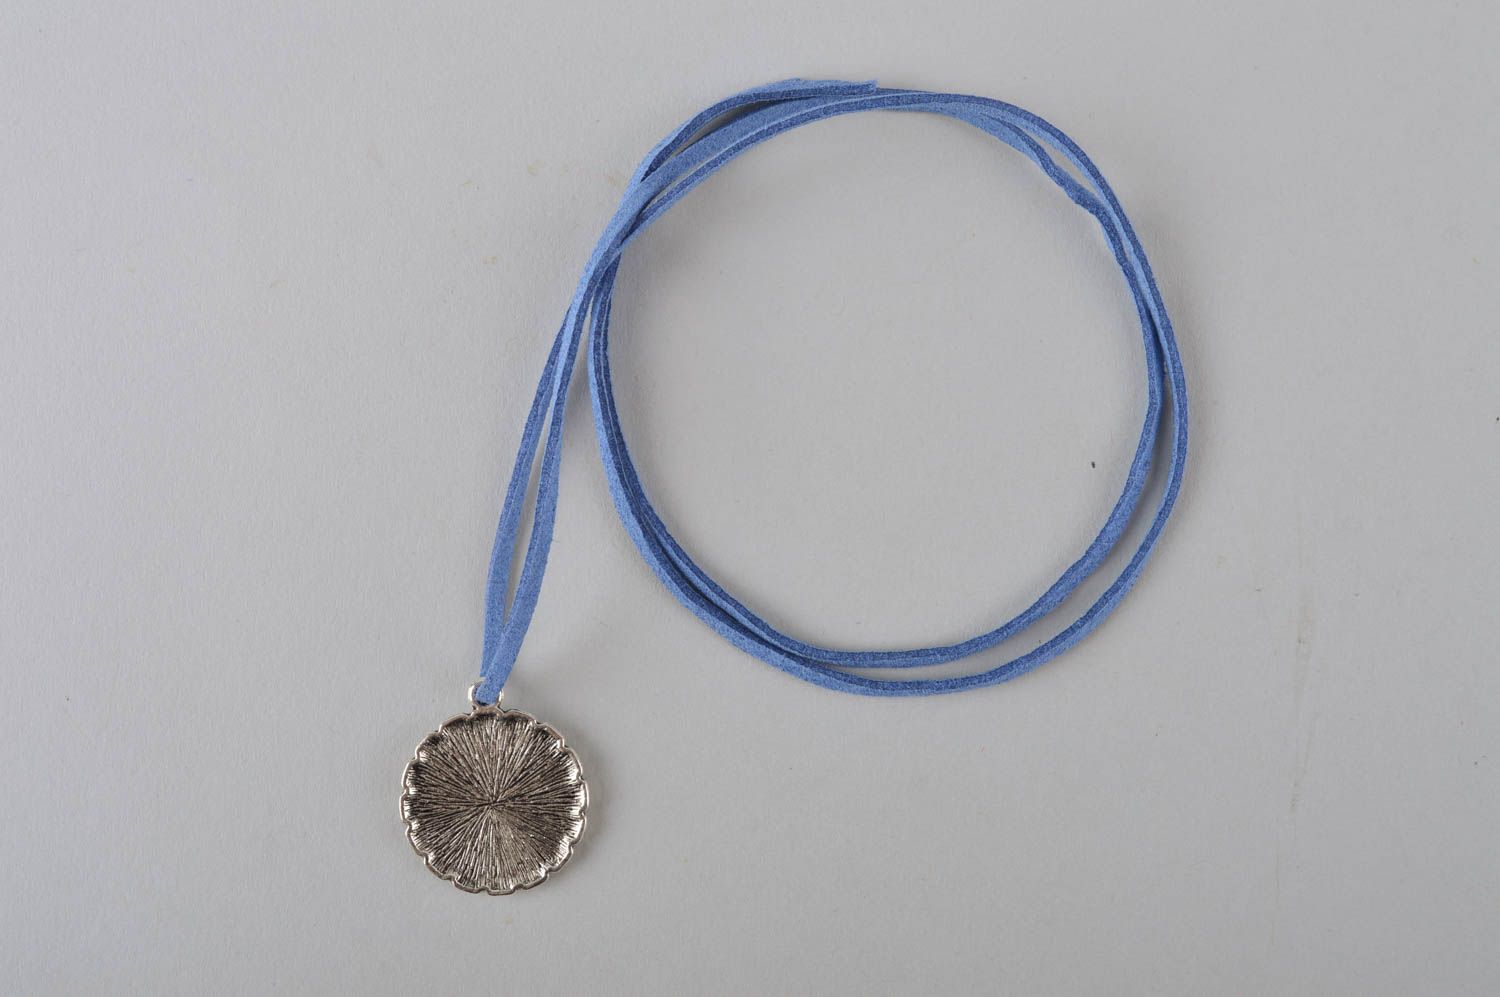 Handmade metal pendant with print designer jewelry pendant on long cord photo 5